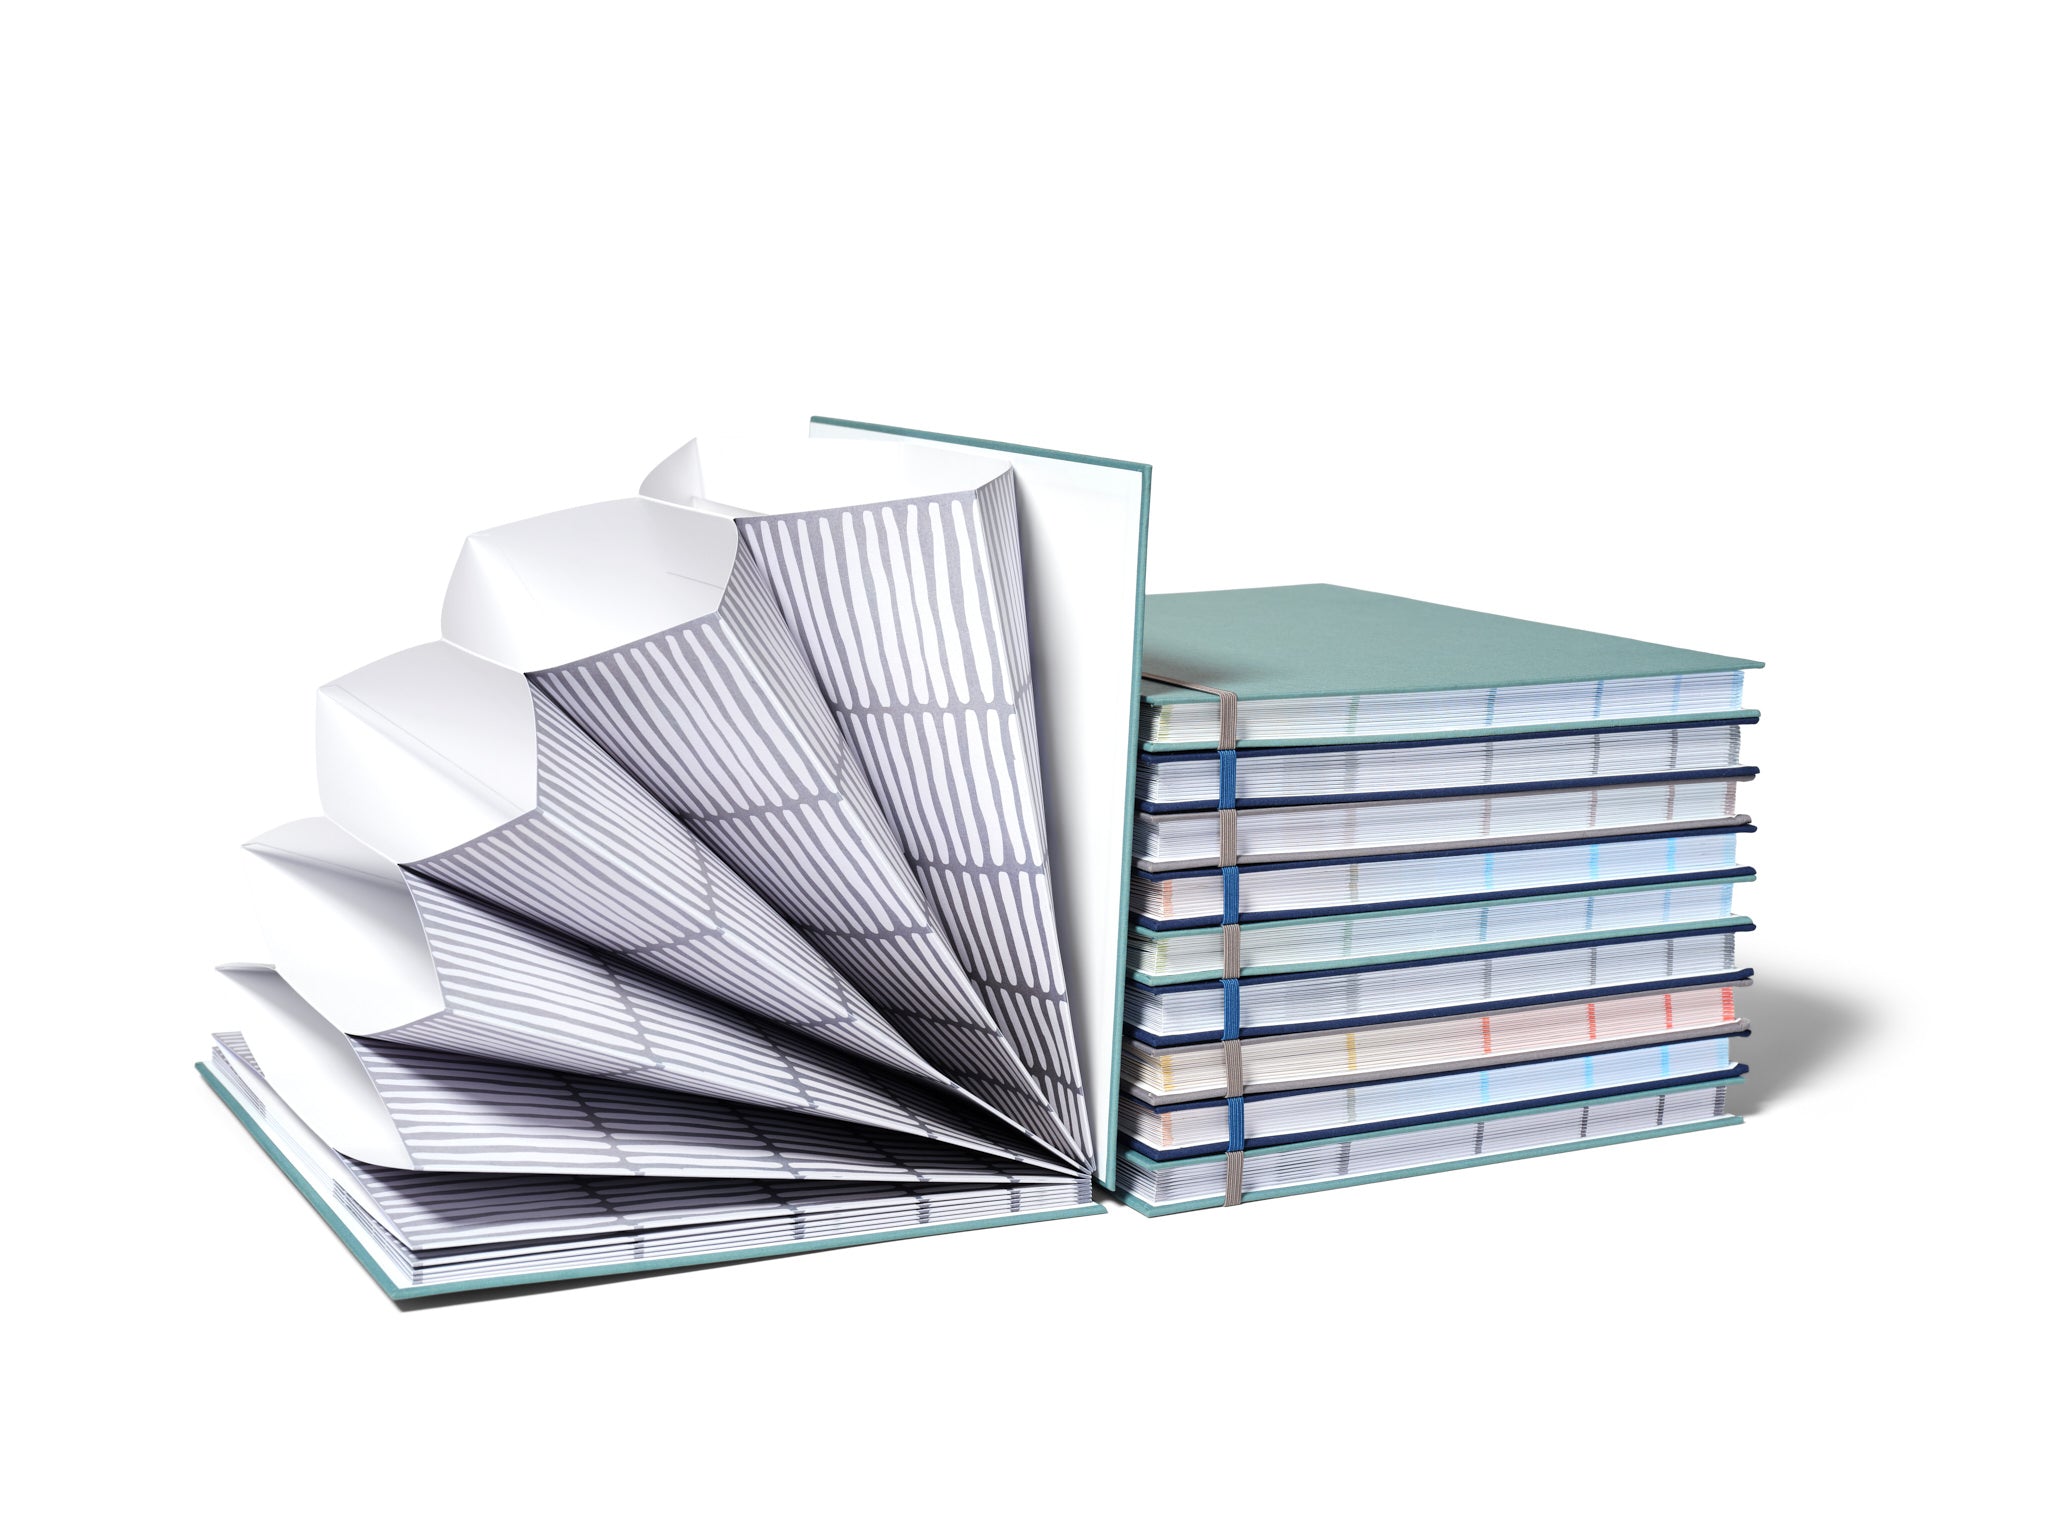 Savor Fan folios, one open leaning against nine stacked